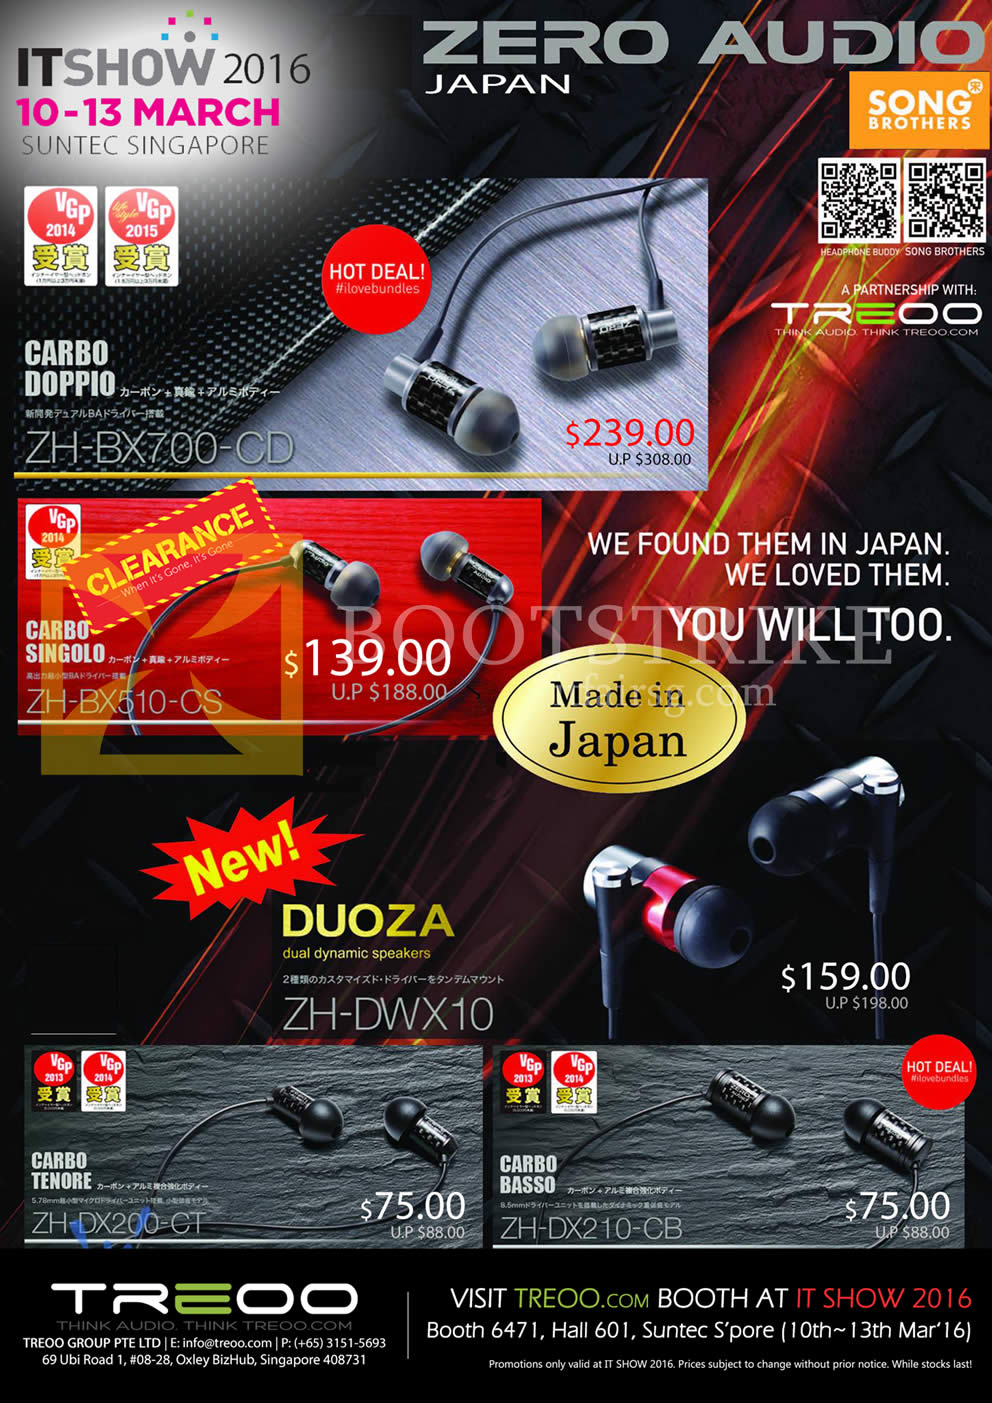 IT SHOW 2016 price list image brochure of Treoo Earphones Zero Audio ZH-BX700-CD, BX510-CS, Duoza DWX10, DX200-CT, DX210-CB